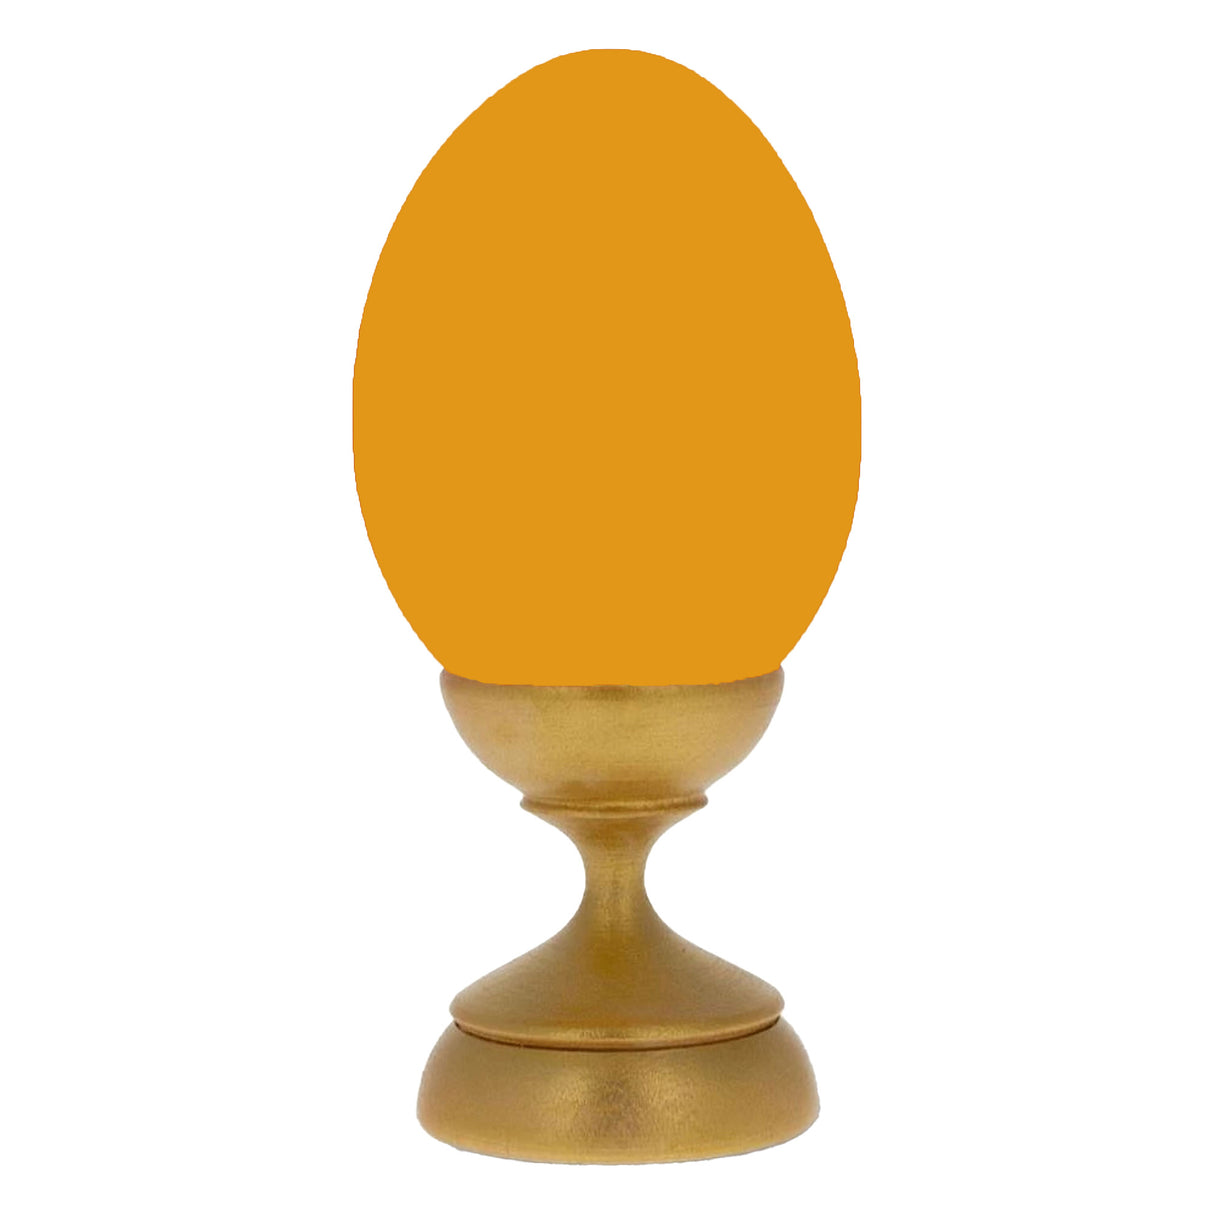 Powder Gold Ochre Batik Dye for Pysanky Easter Eggs Decorating in Gold color